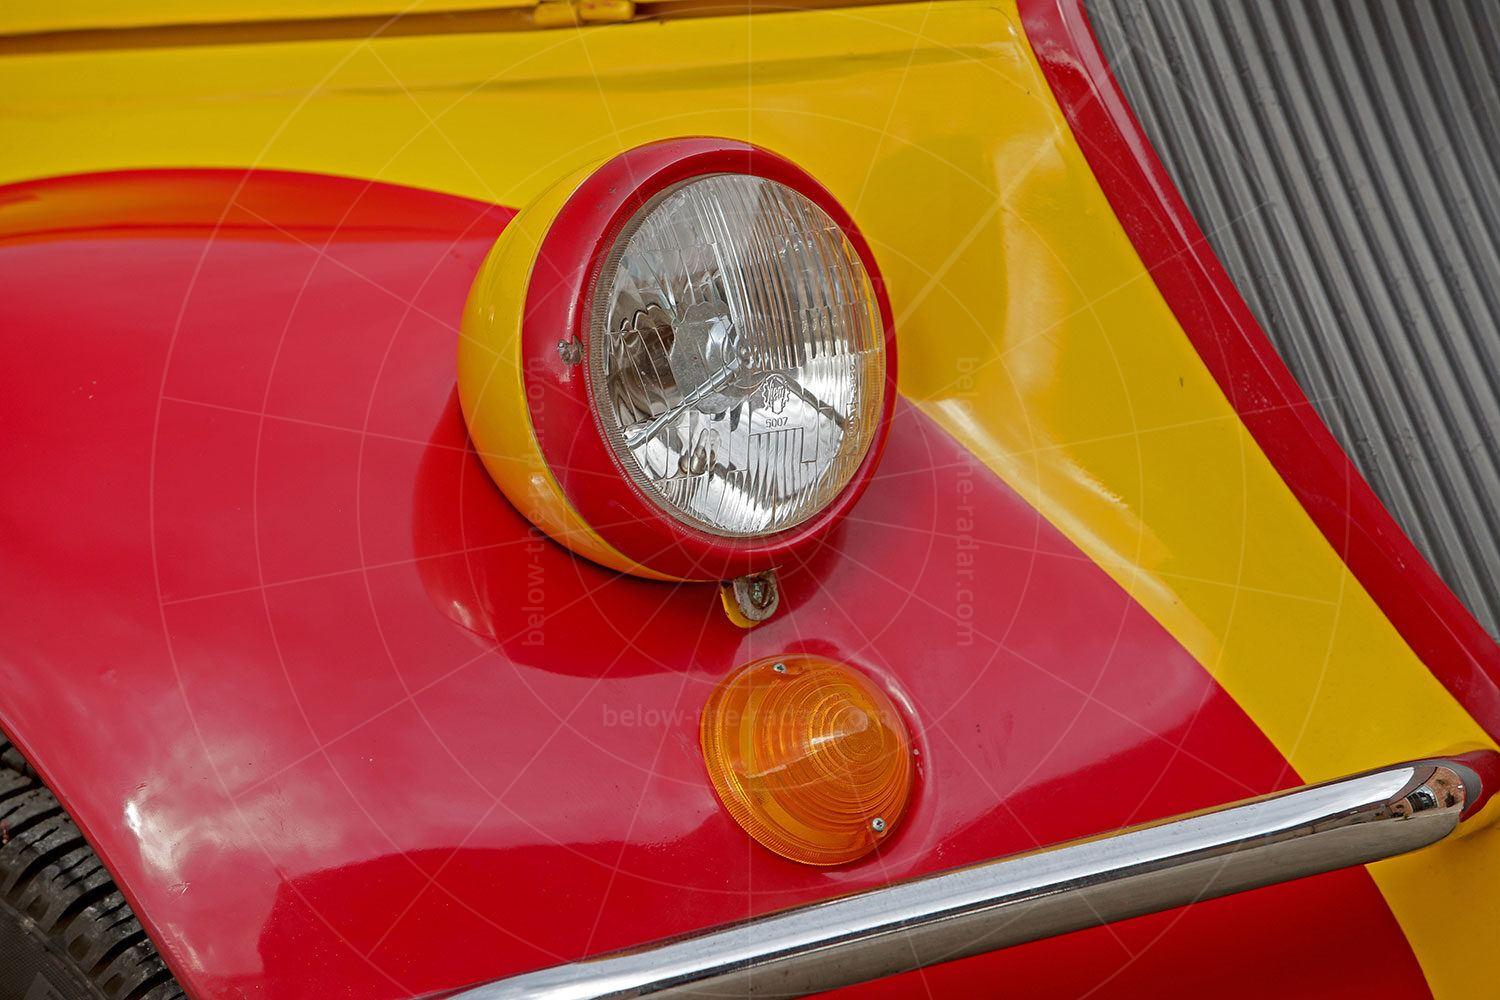 Fiat Gamine headlight Pic: magiccarpics.co.uk | Fiat Gamine headlight